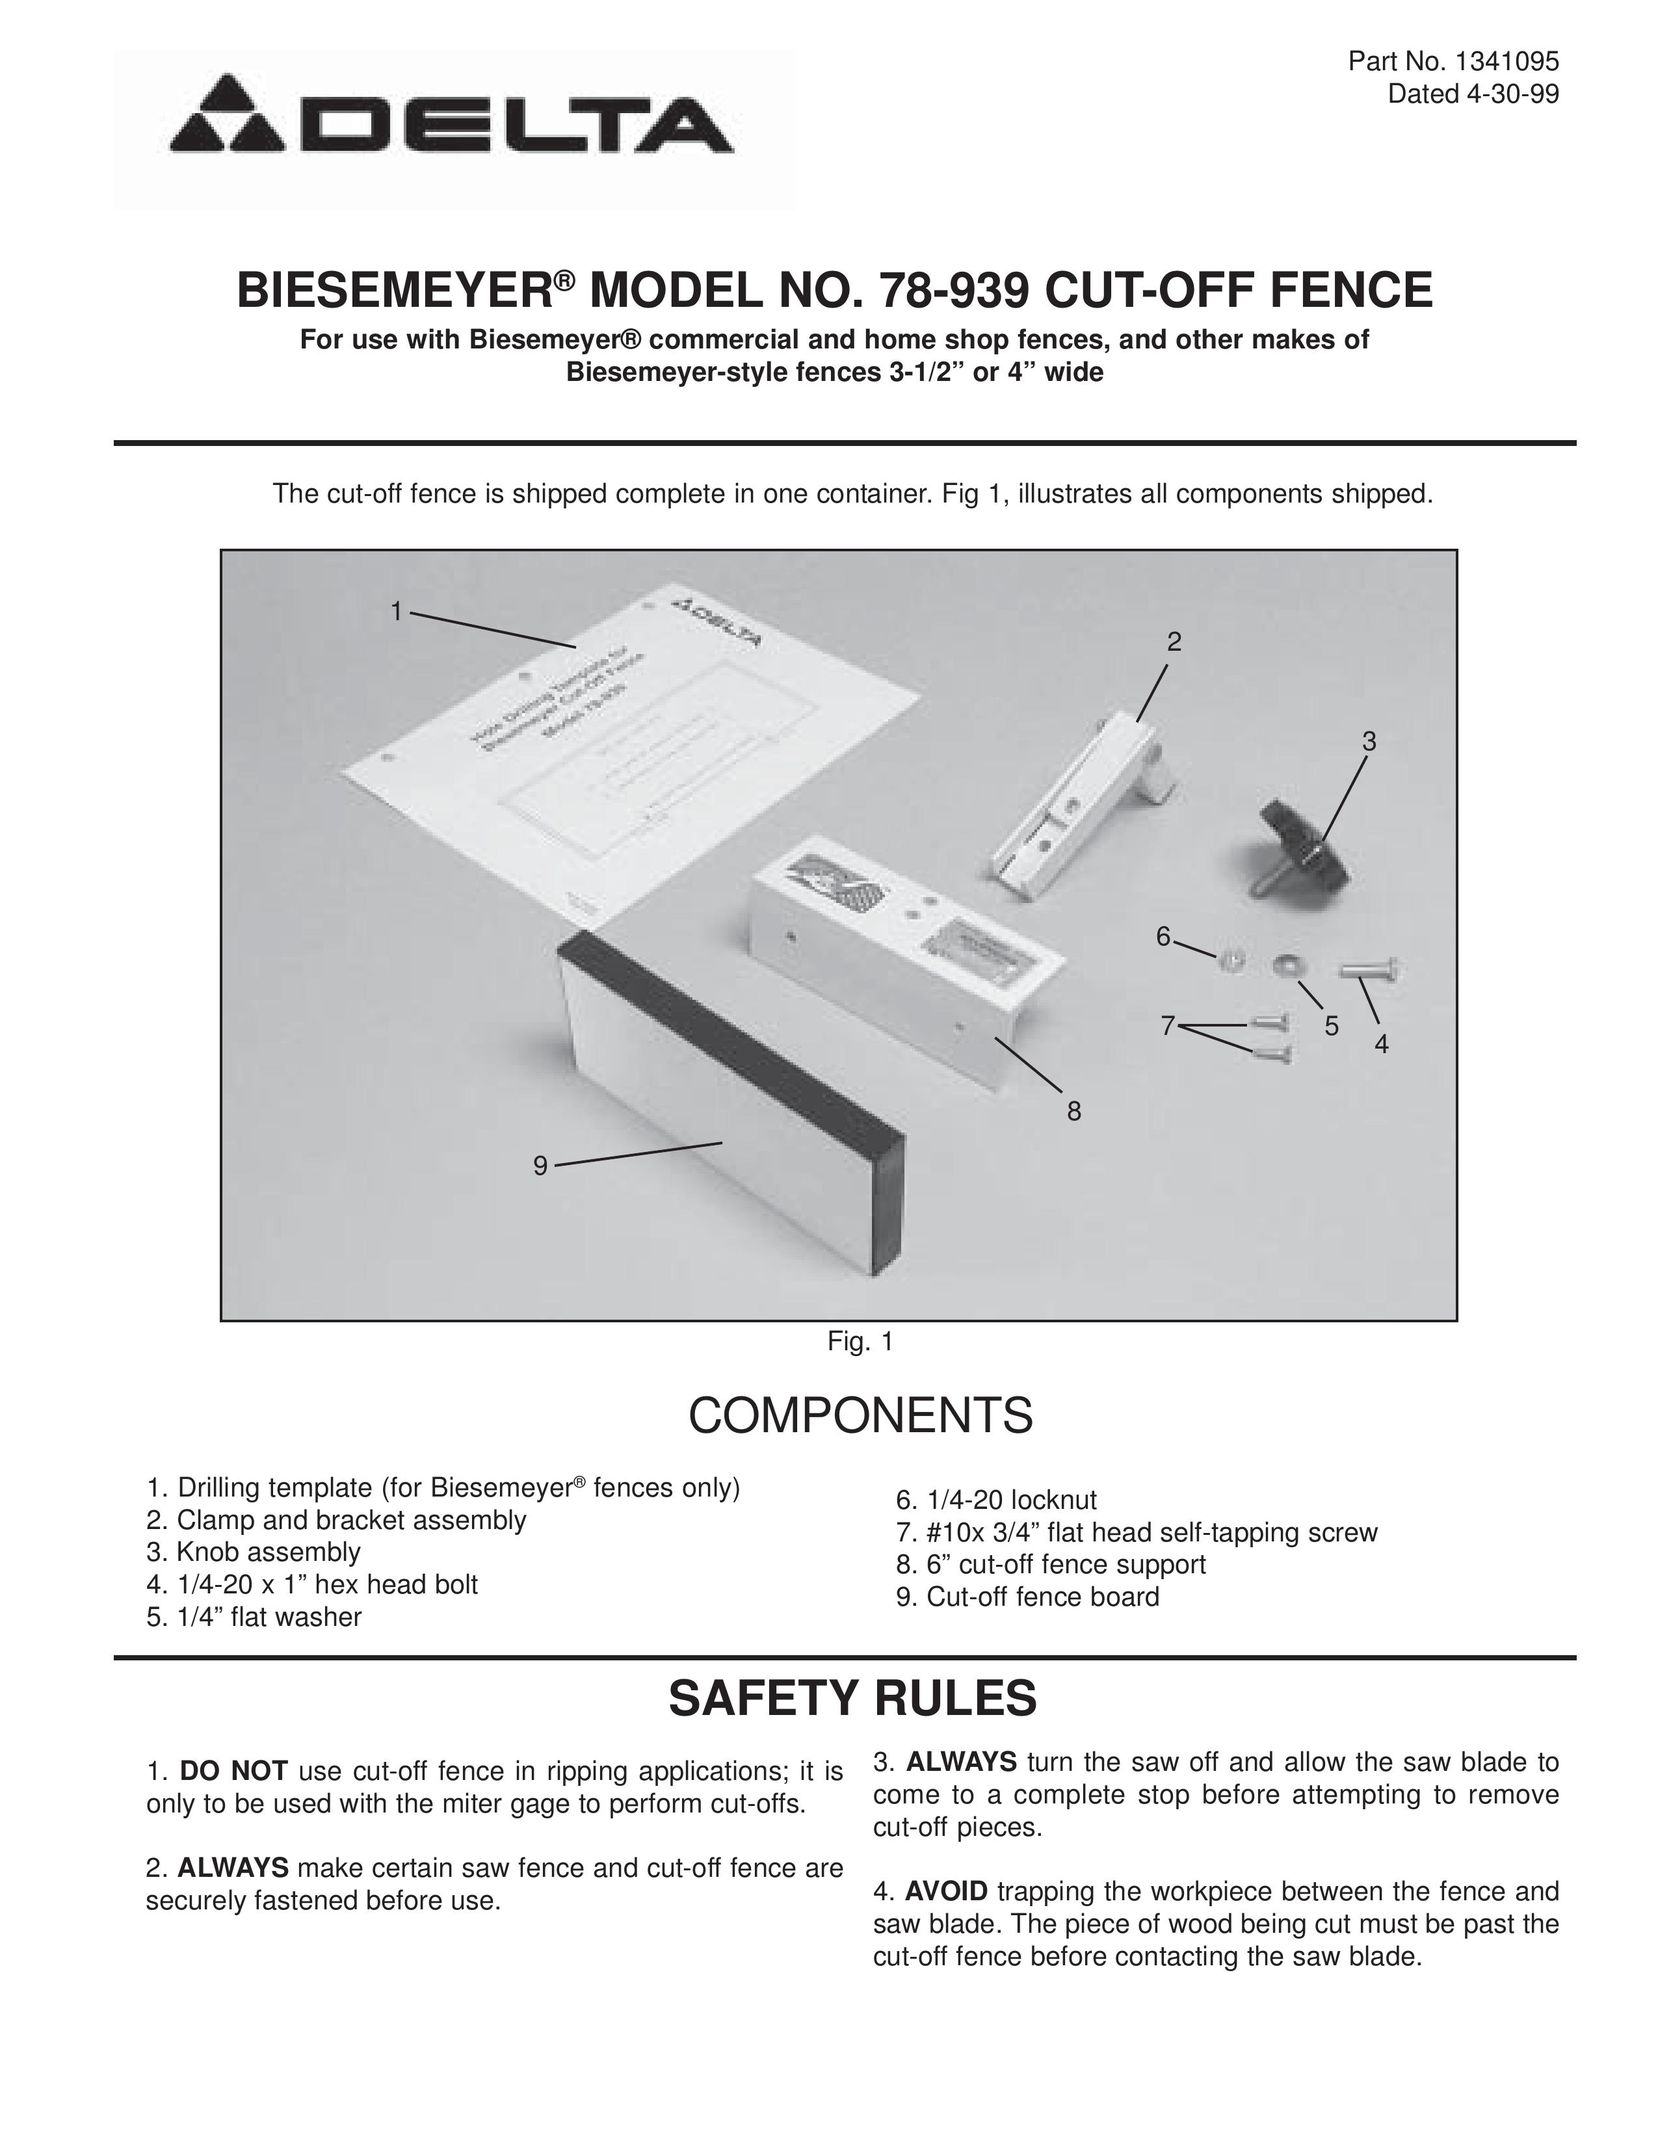 Delta 78-939 Pet Fence User Manual